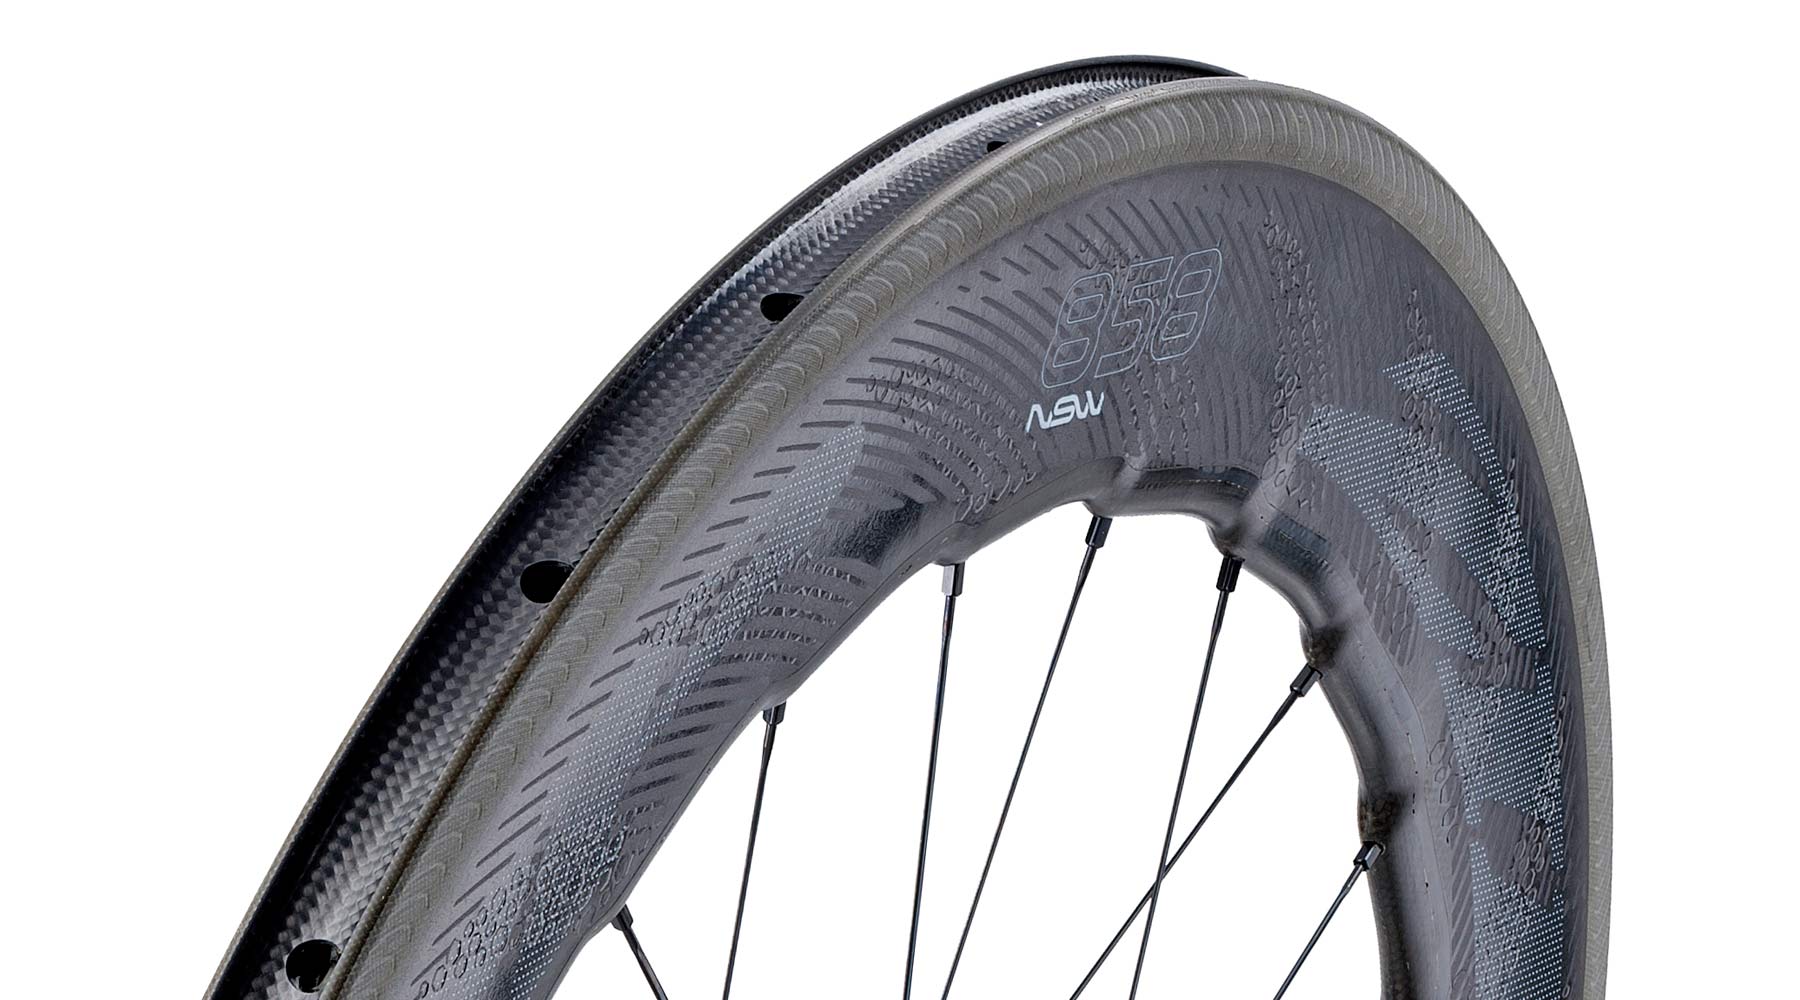 Zipp 858 NSW aero deep section carbon clincher road bike race wheels rim brake rim bed profile